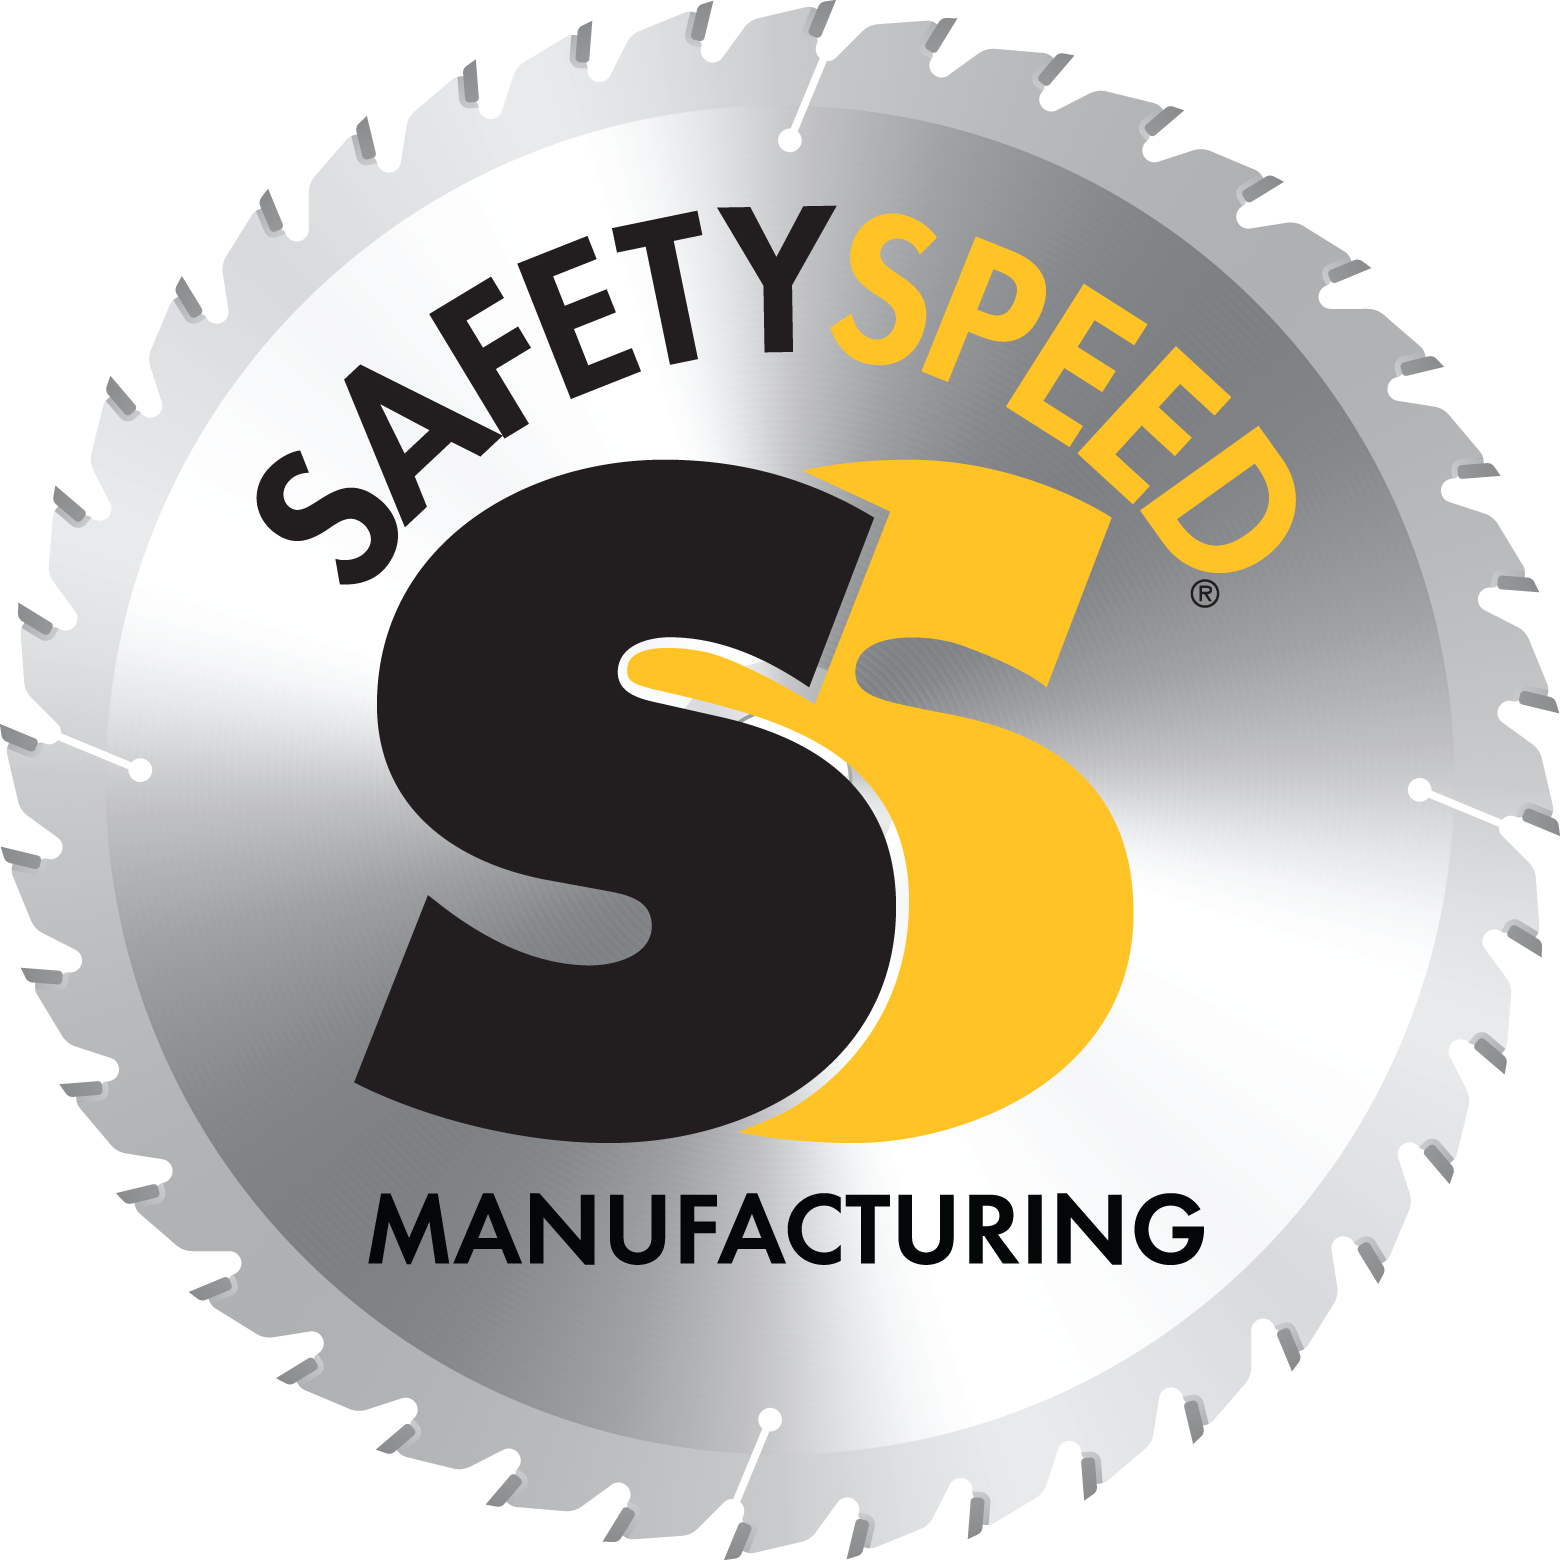 Safety Speed Manufacturing Logo